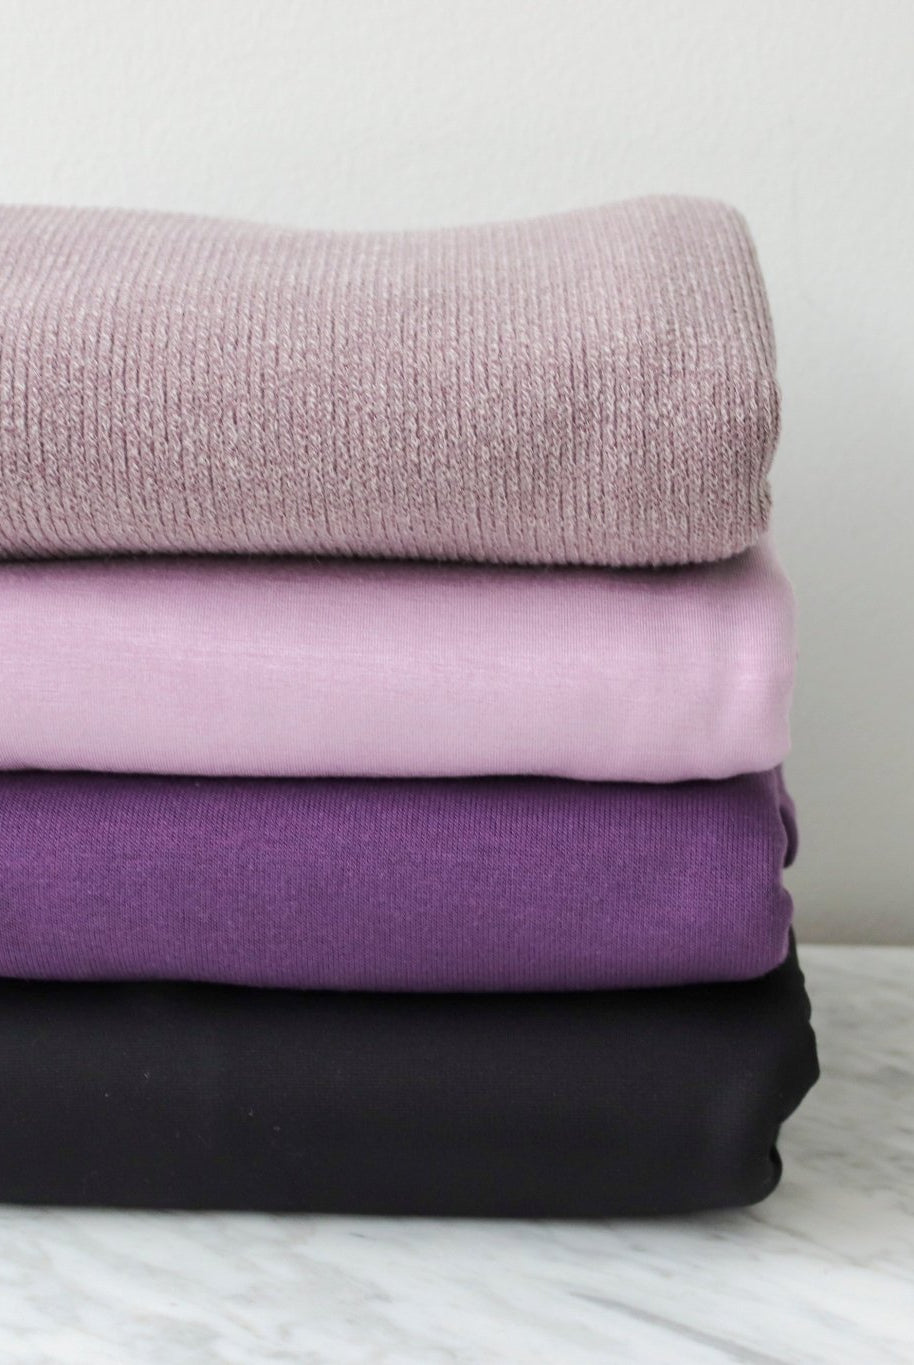 04/23/2024 Fabric Happy Hour! Purple Passion, Knit Bundle. READY TO SHIP! - Boho Fabrics - Fabric Bundles